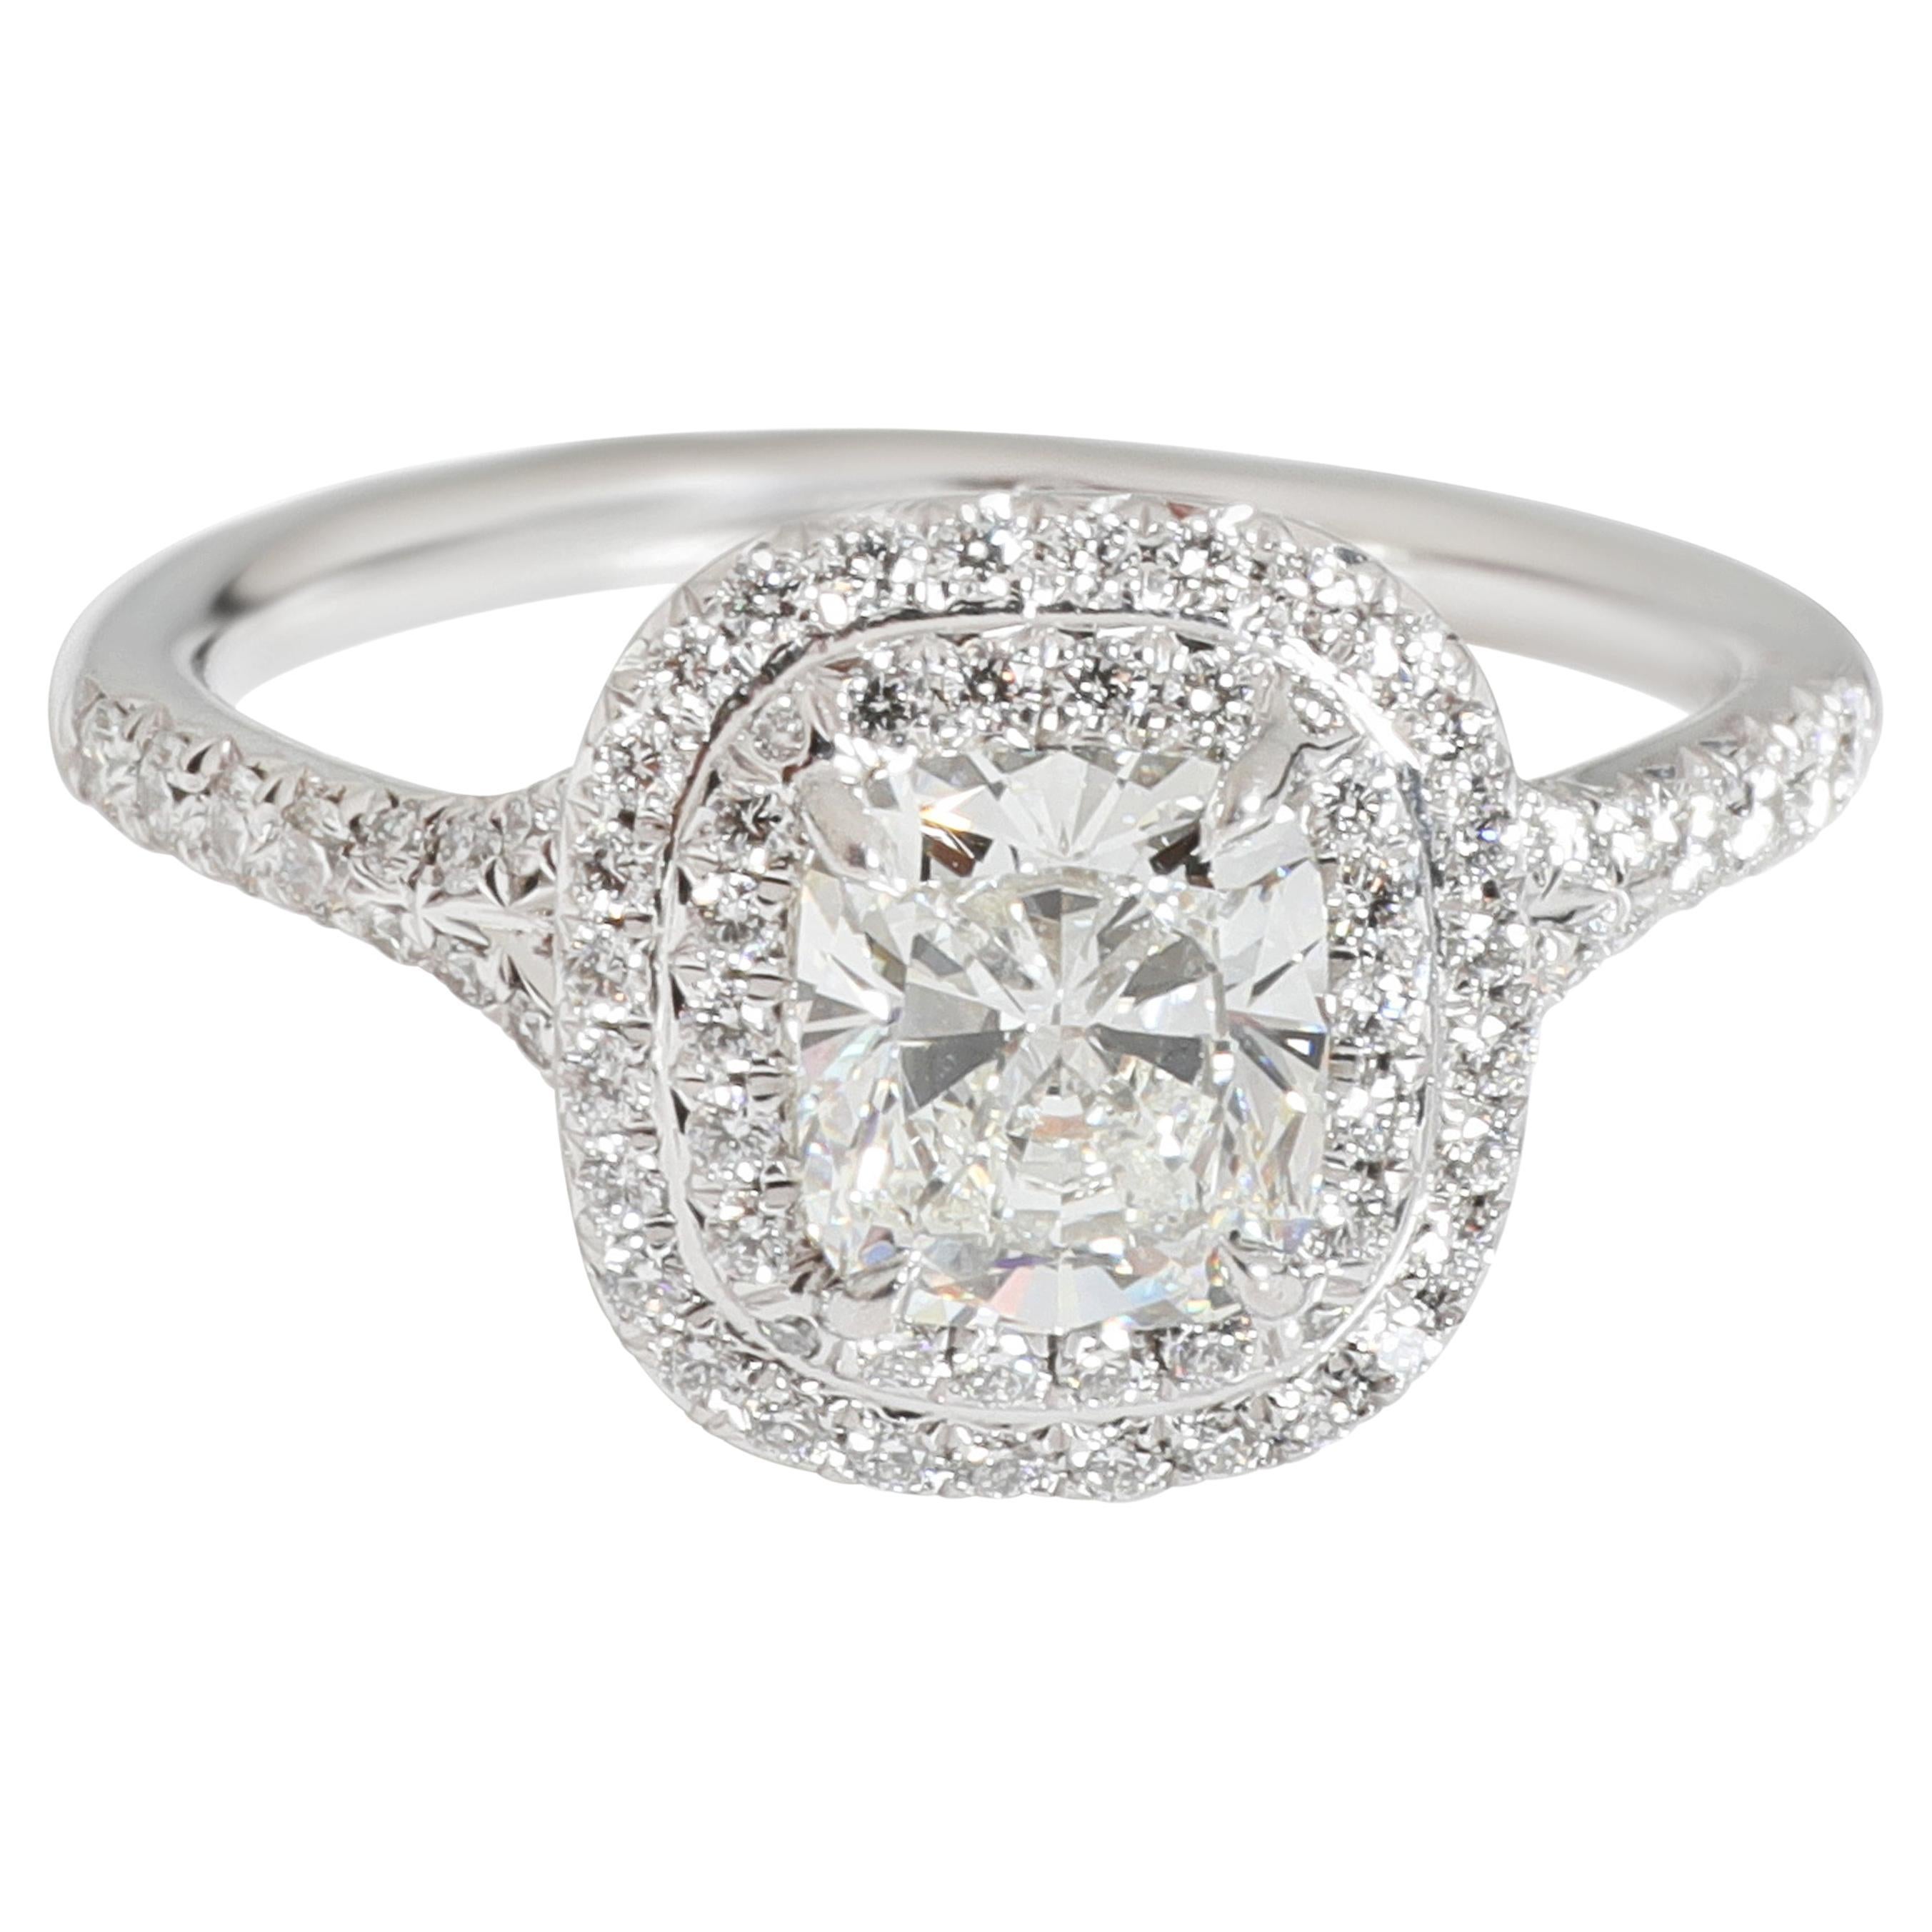 Tiffany & Co. Soleste Diamond Engagement Ring in Platinum G VVS2 1.40 CTW